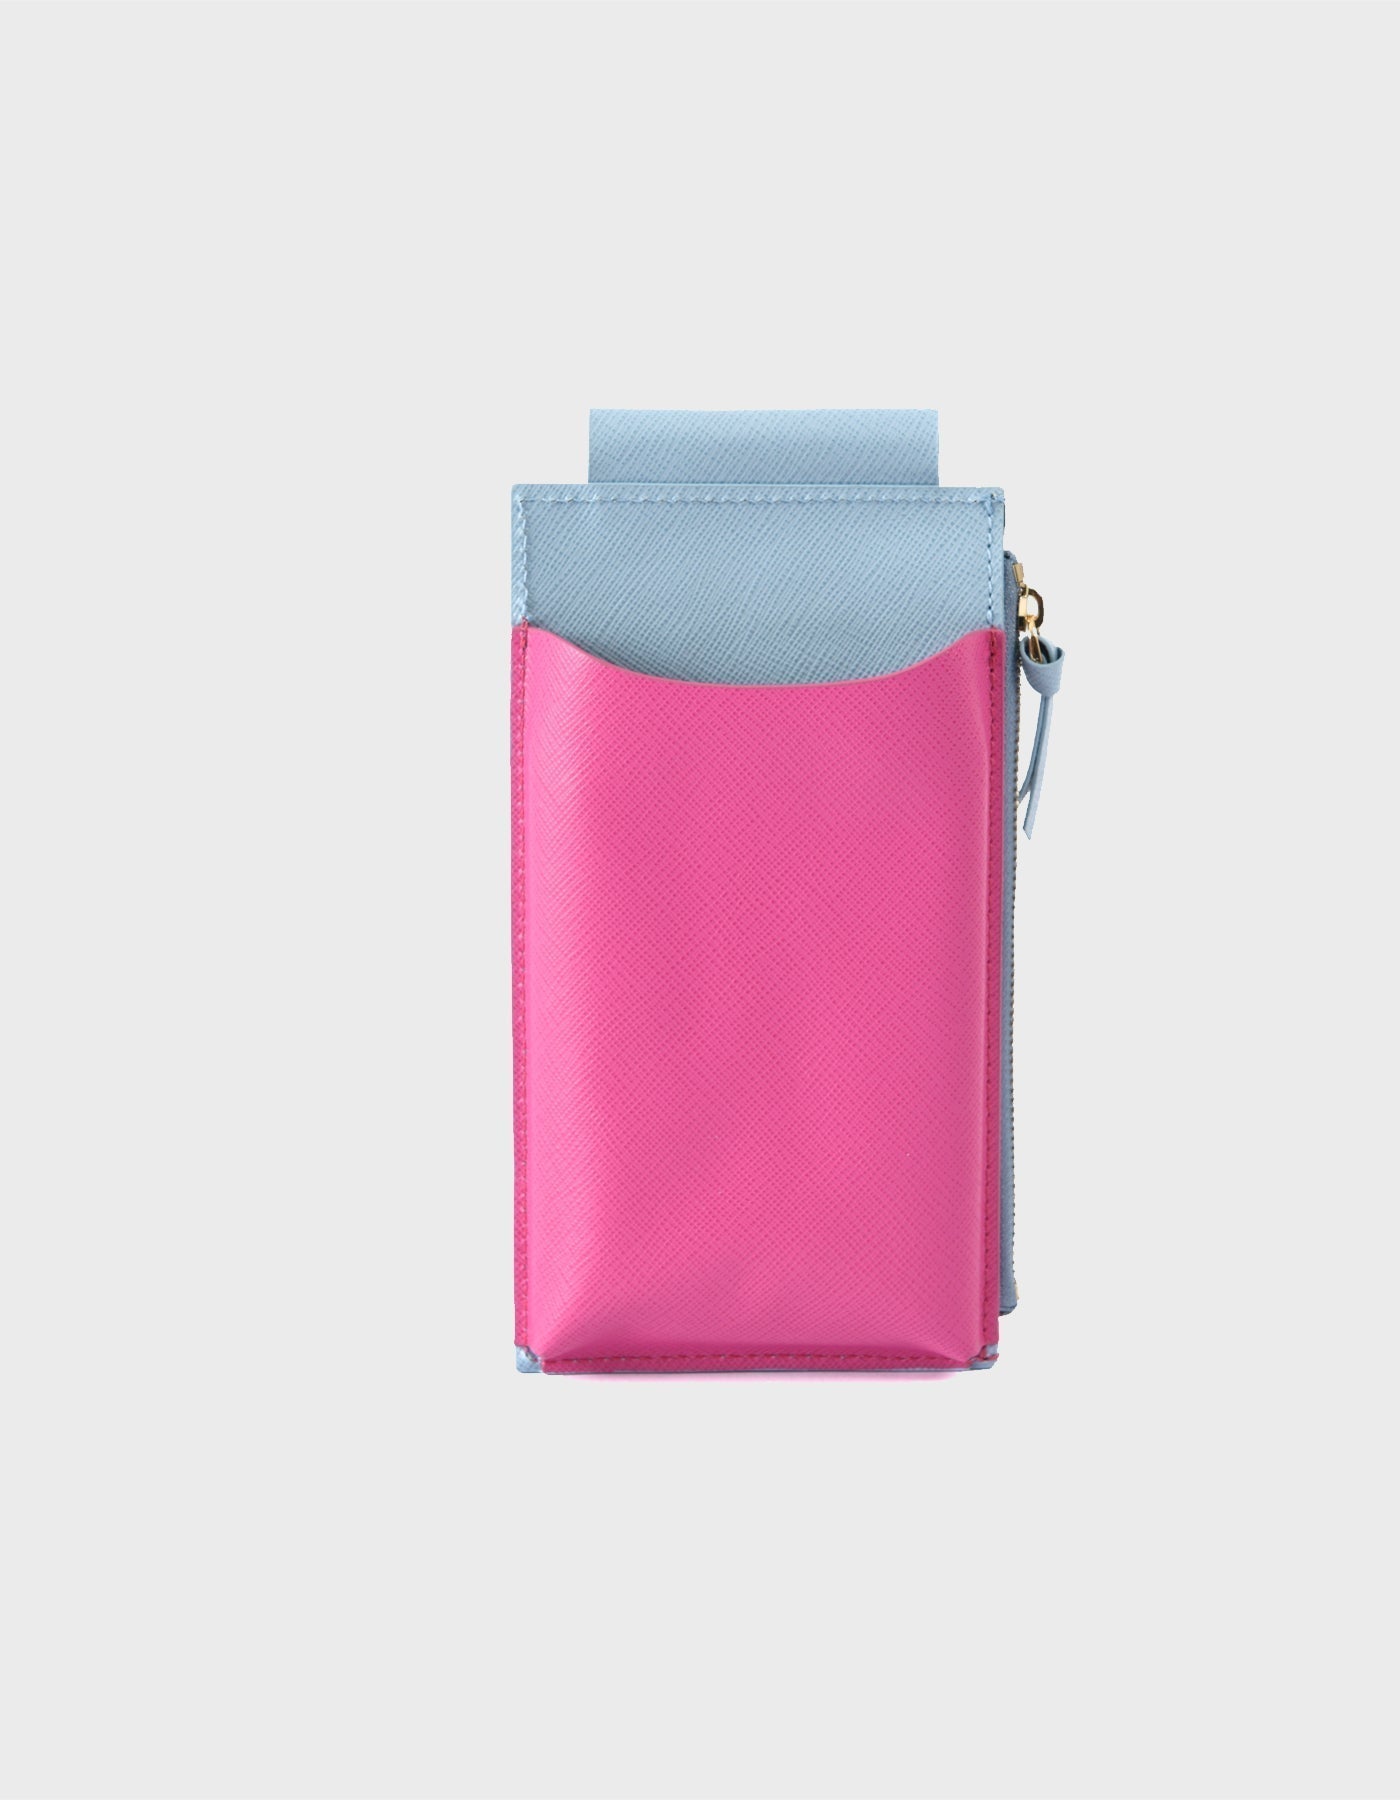 HiVa Atelier - Crossbody Phone Bag Fuchsia & Orange & Sky Blue